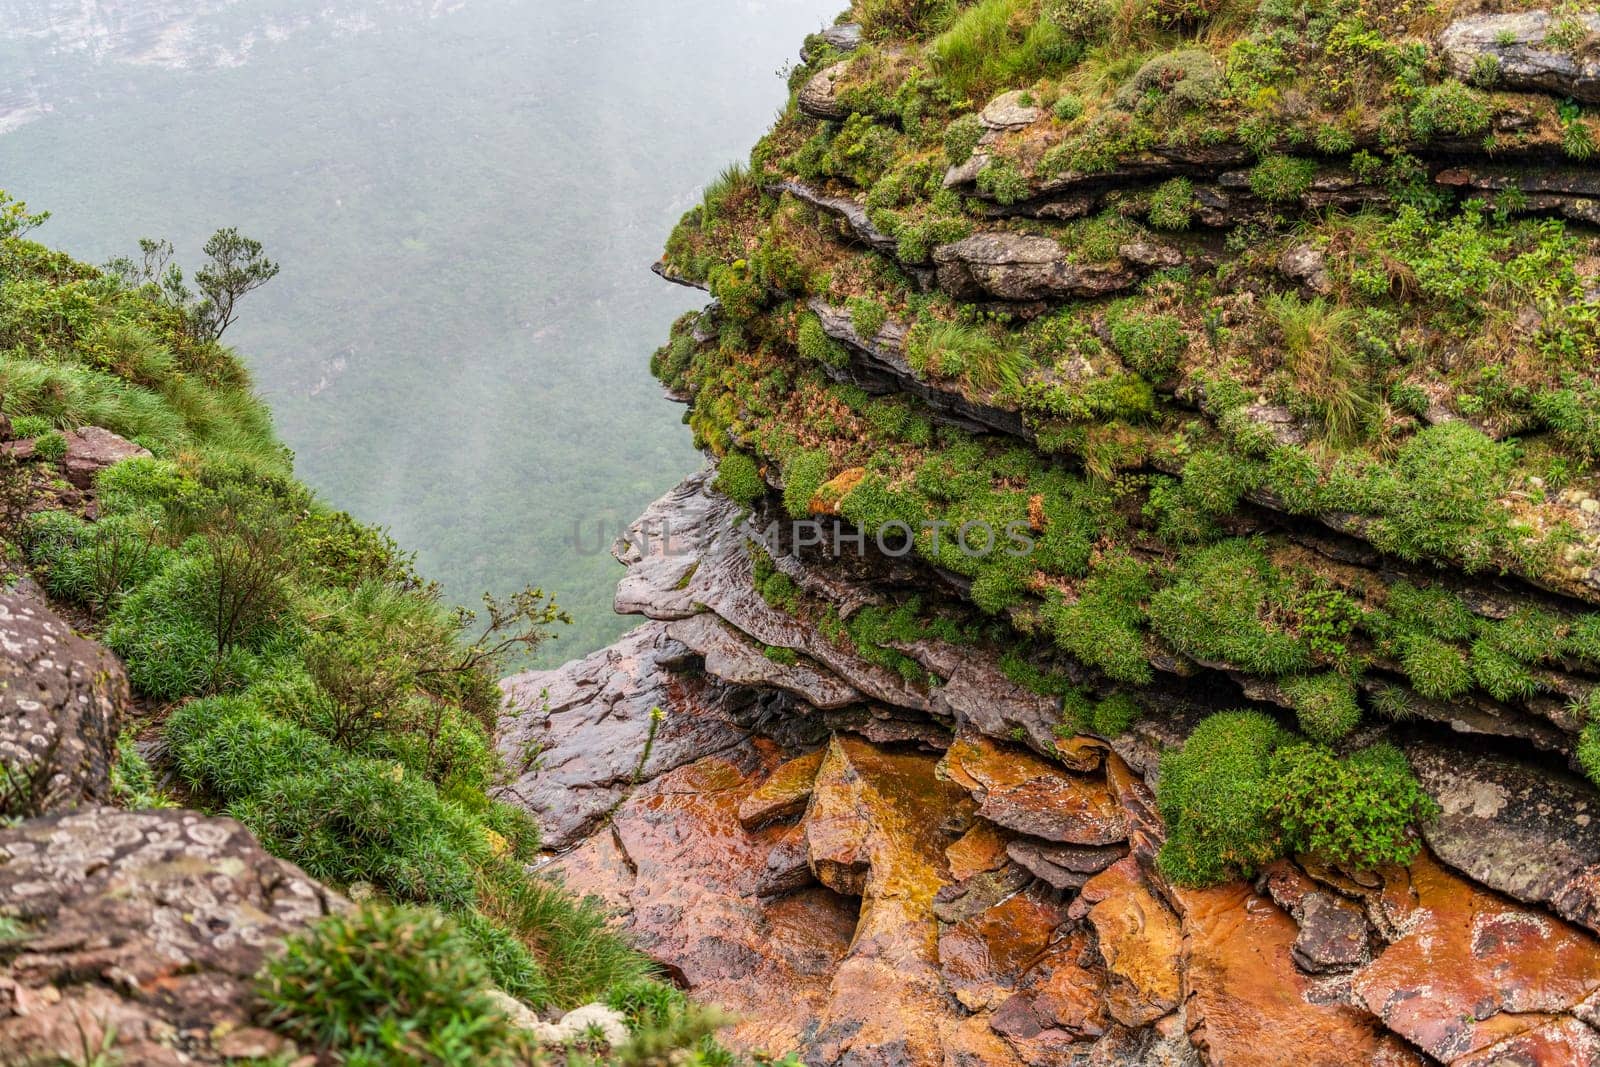 Breathtaking View from the Top of Fumaca Waterfall in Brazil by FerradalFCG